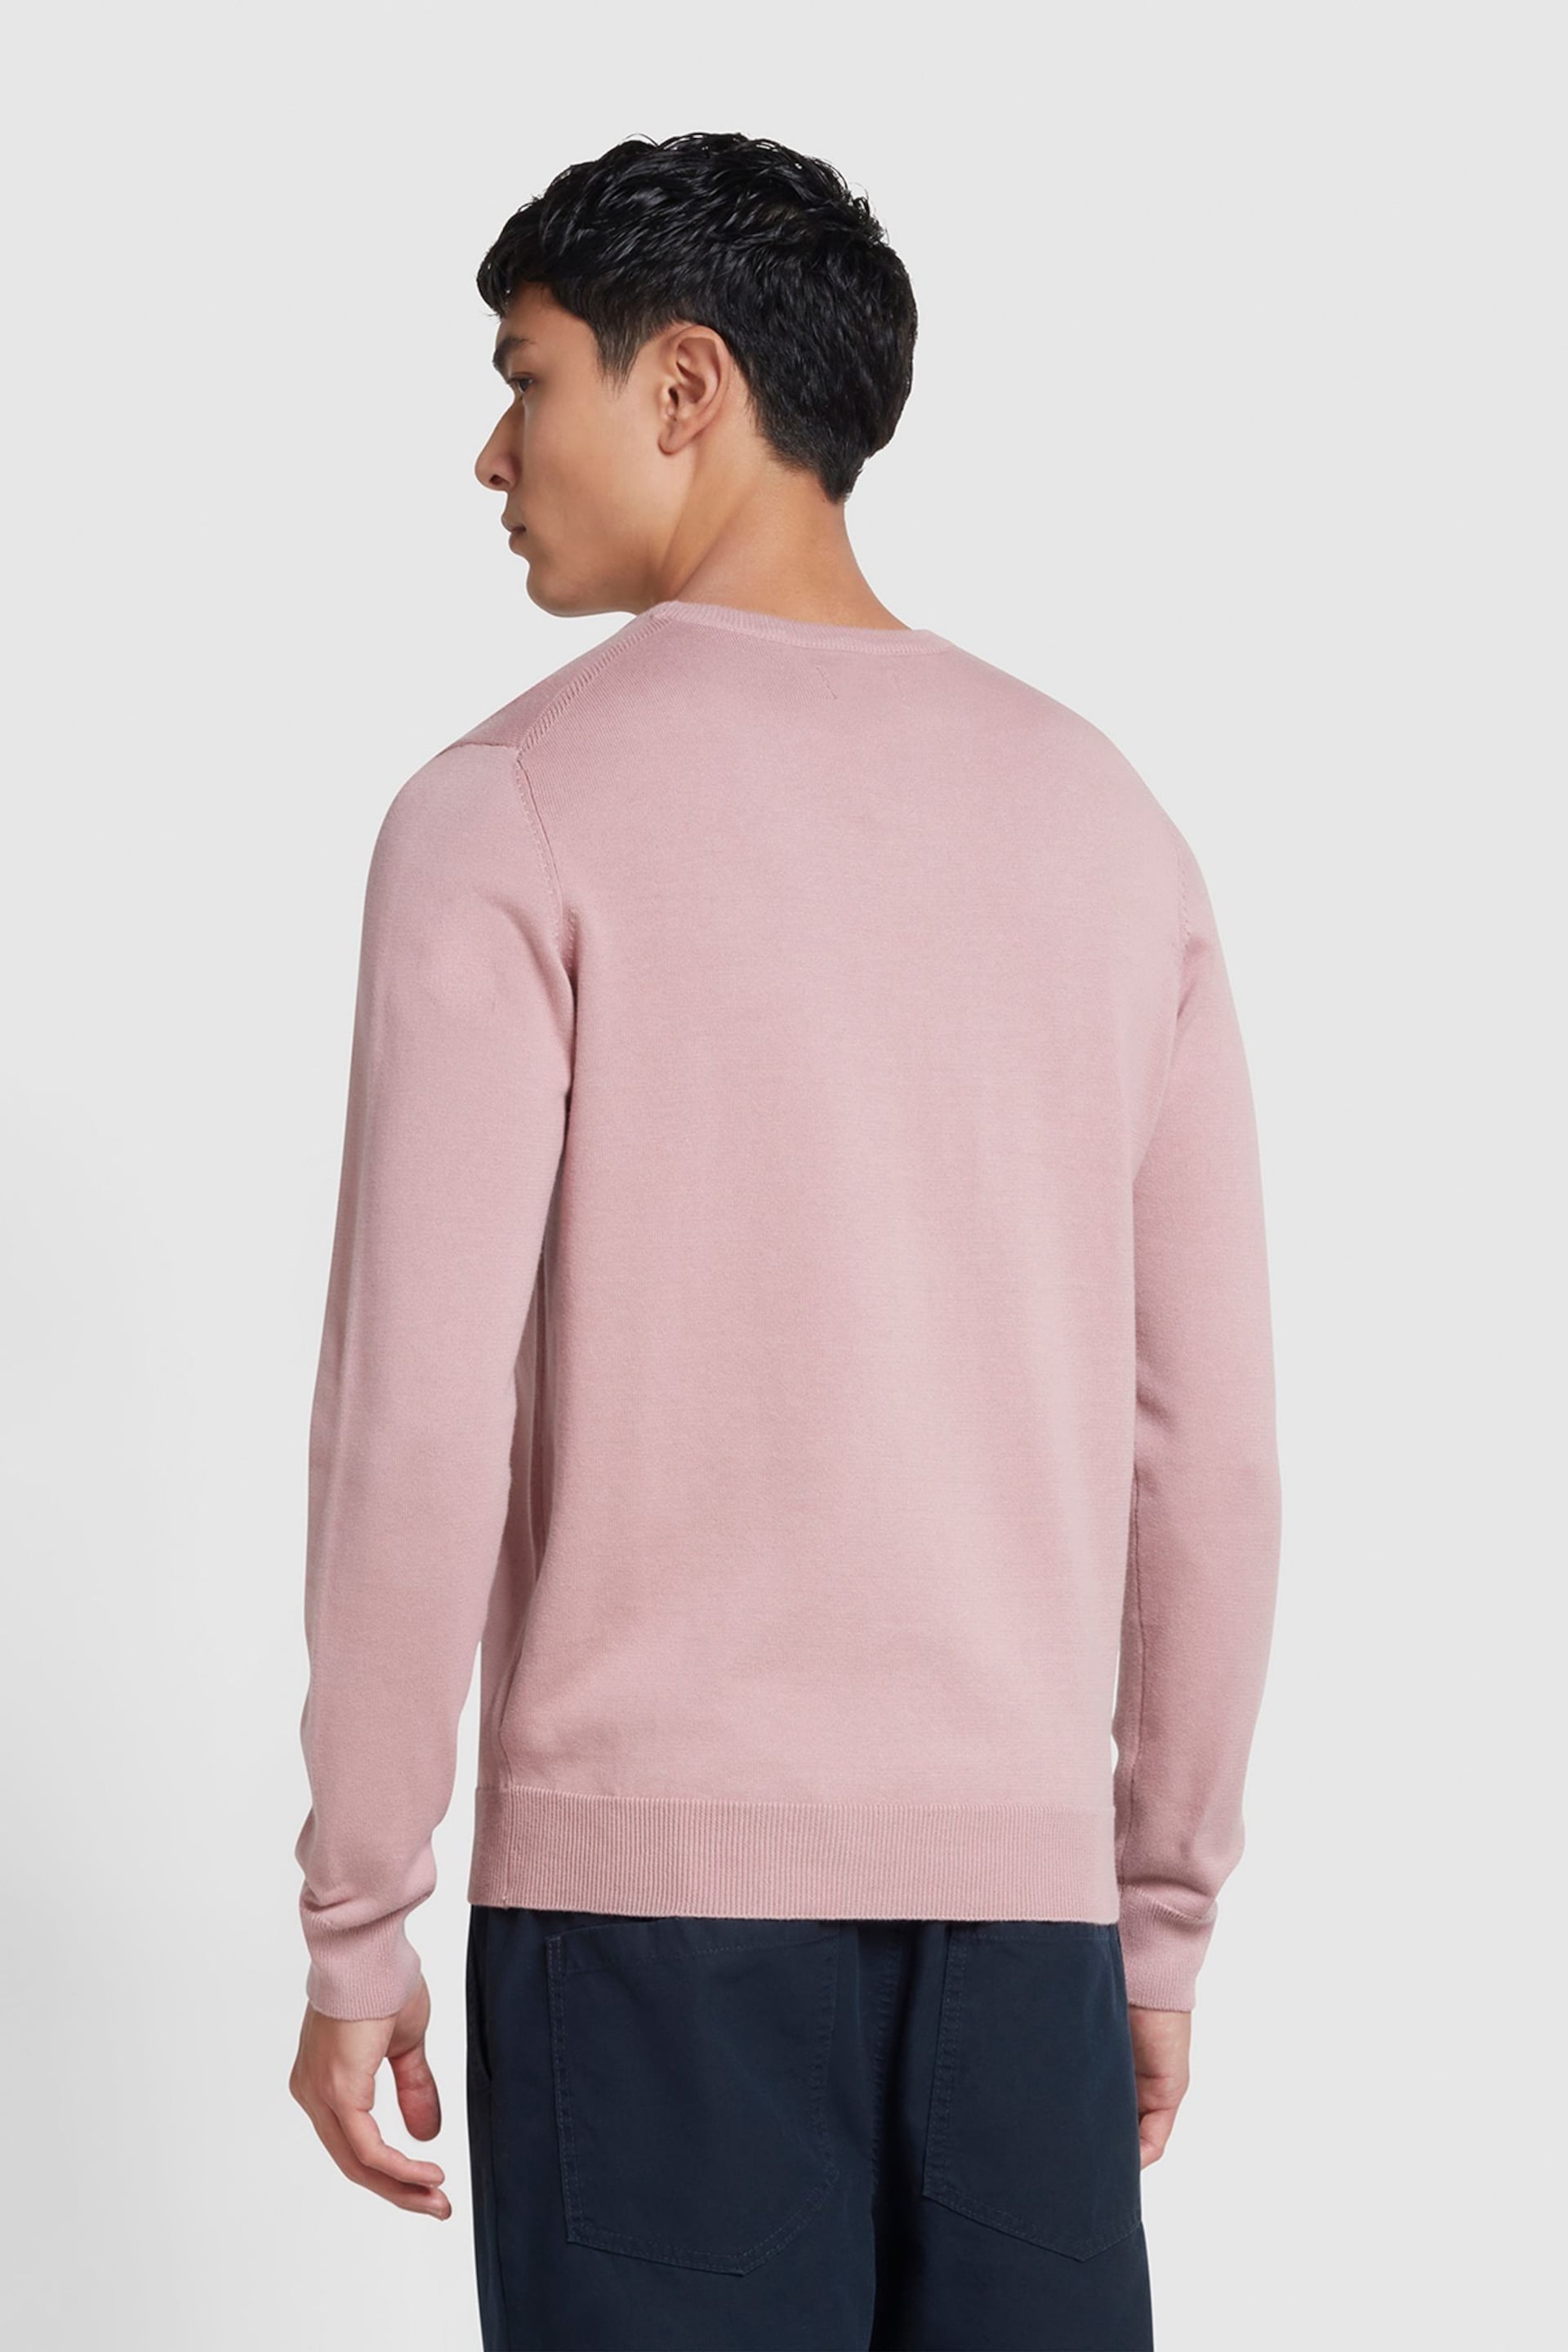 Farah Pink Mullen Cotton Crew Neck Sweater - Image 3 of 4